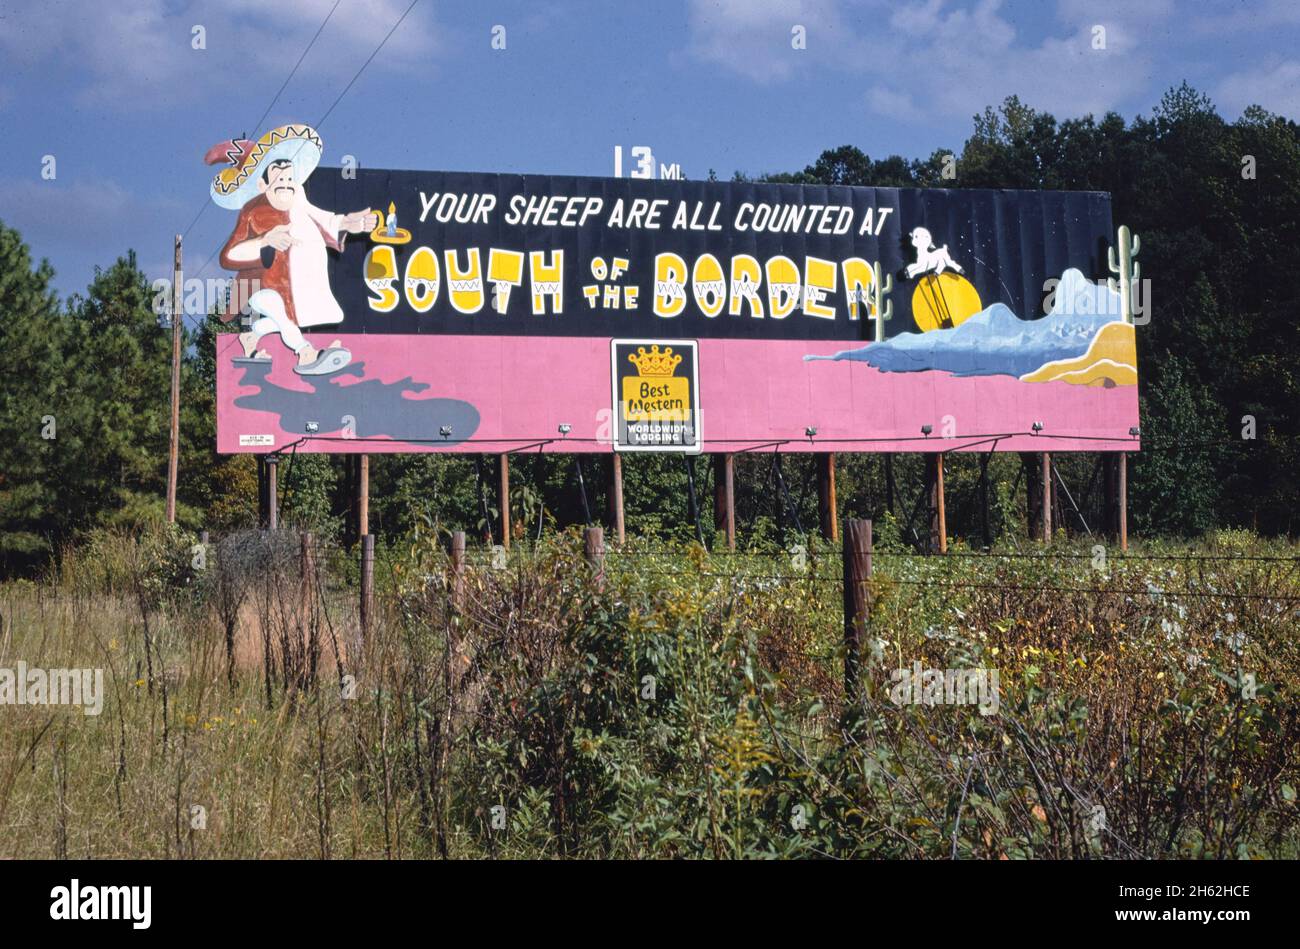 South of the border, 13 mile billboard near Dillon, South Carolina; ca. 1986 Stock Photo